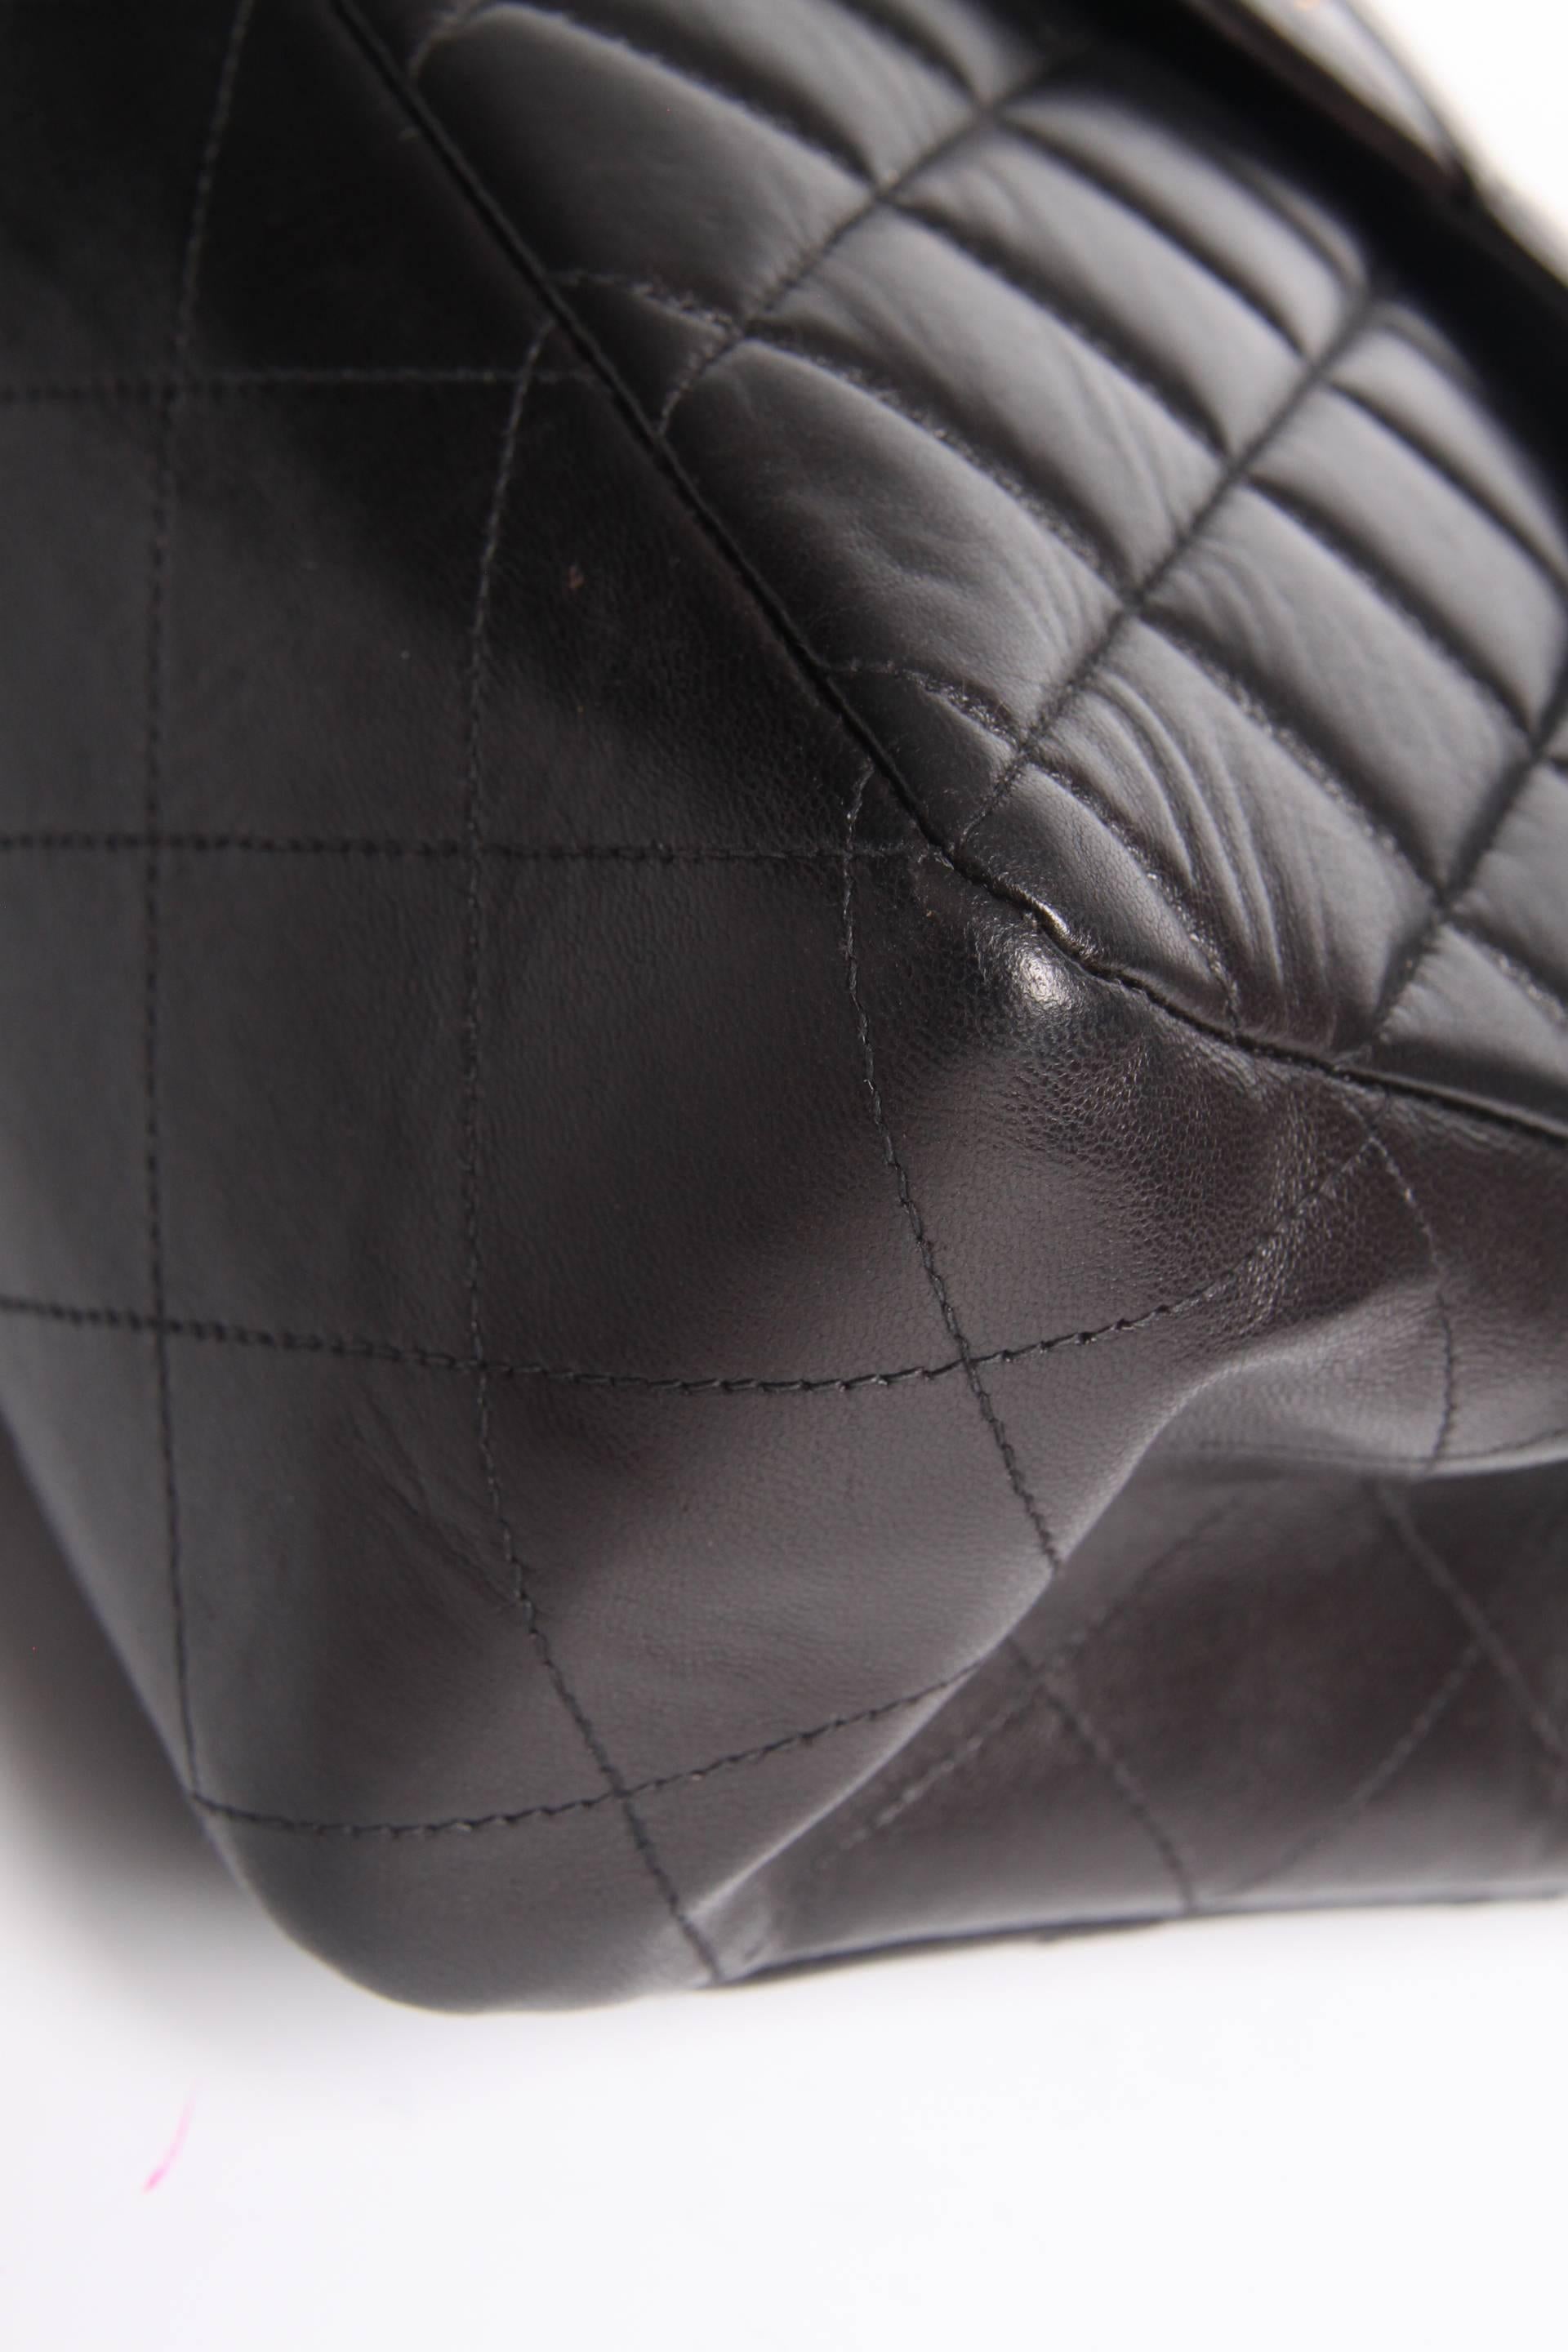  Chanel 2.55 Timeless Jumbo Flap Bag - black leather 1997 2